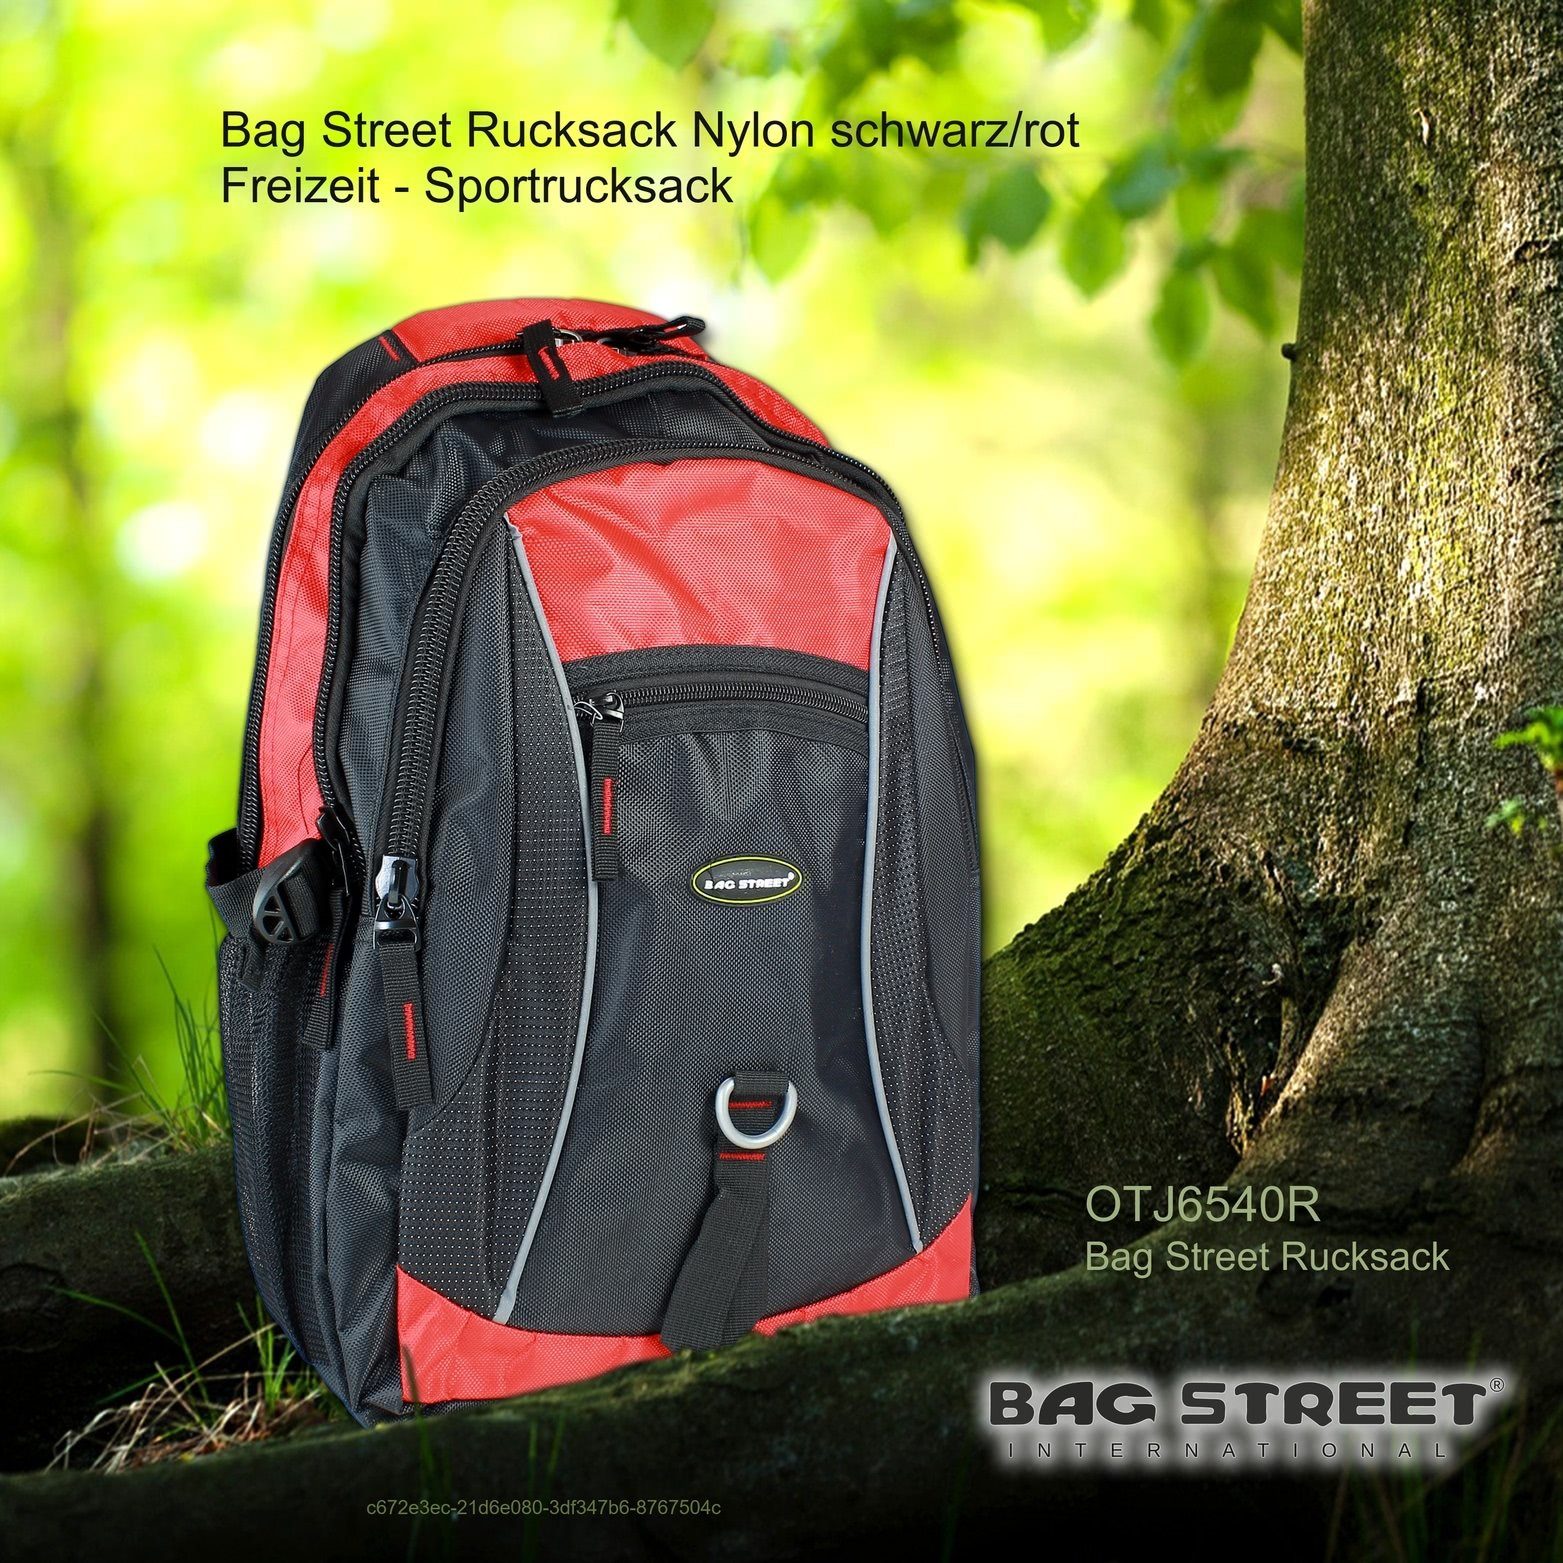 BAG STREET Nylon ca. Sportrucksack Sportrucksack, (Sportrucksack), 31cm Bag ca. Nylon, Street schwarz/rot Freizeitrucksack 45cm x schwarz Freizeitrucksack